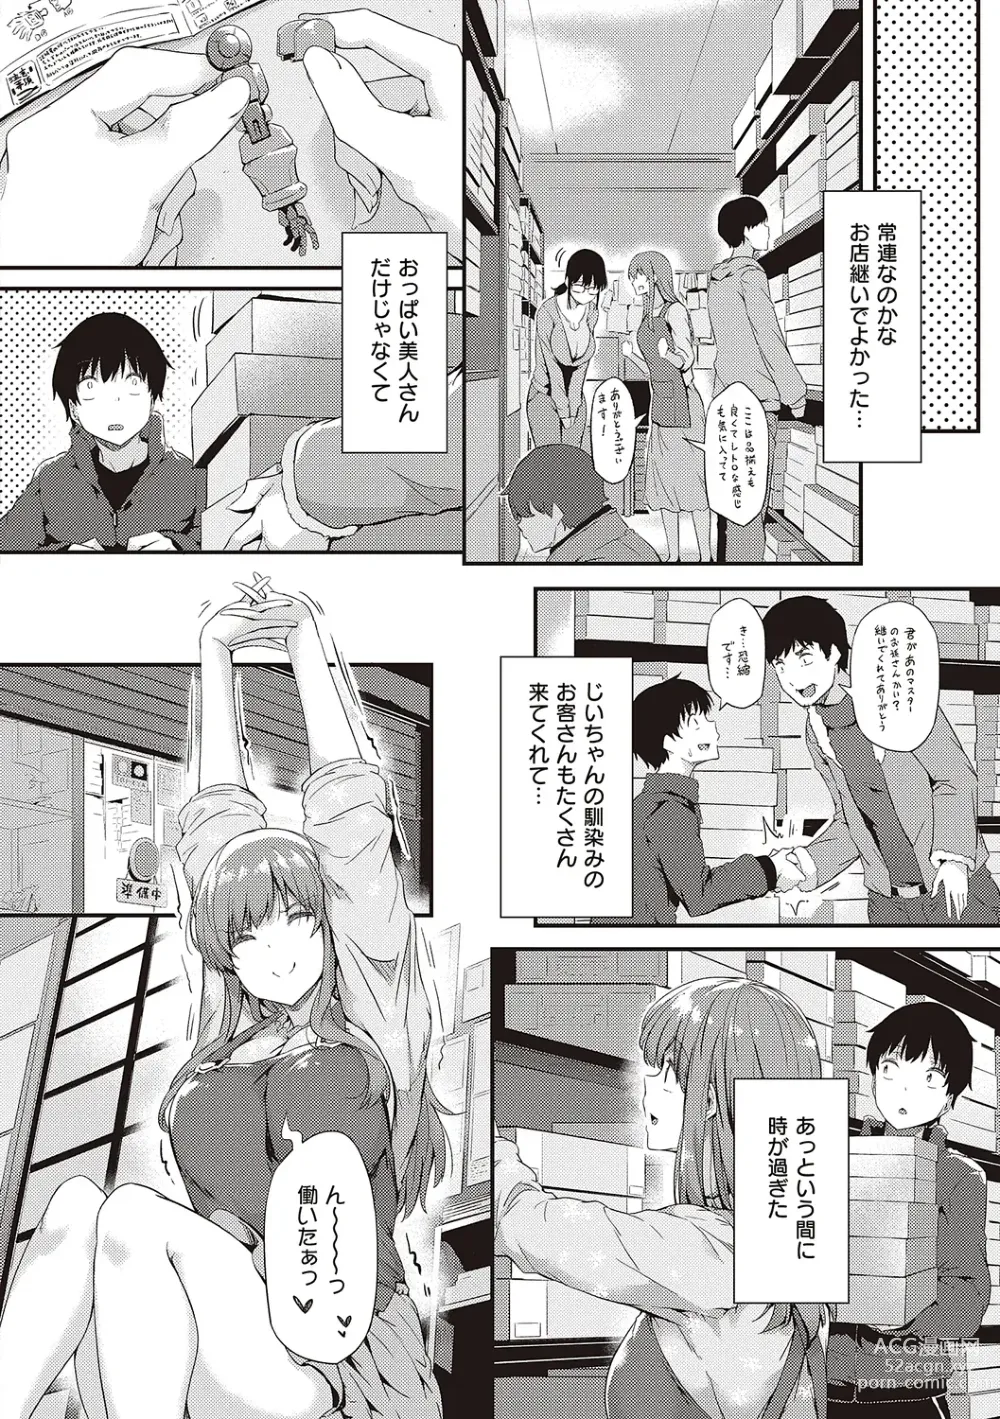 Page 18 of manga Shiranai Koto Shiritai no? - Dont you wanna learn something new?